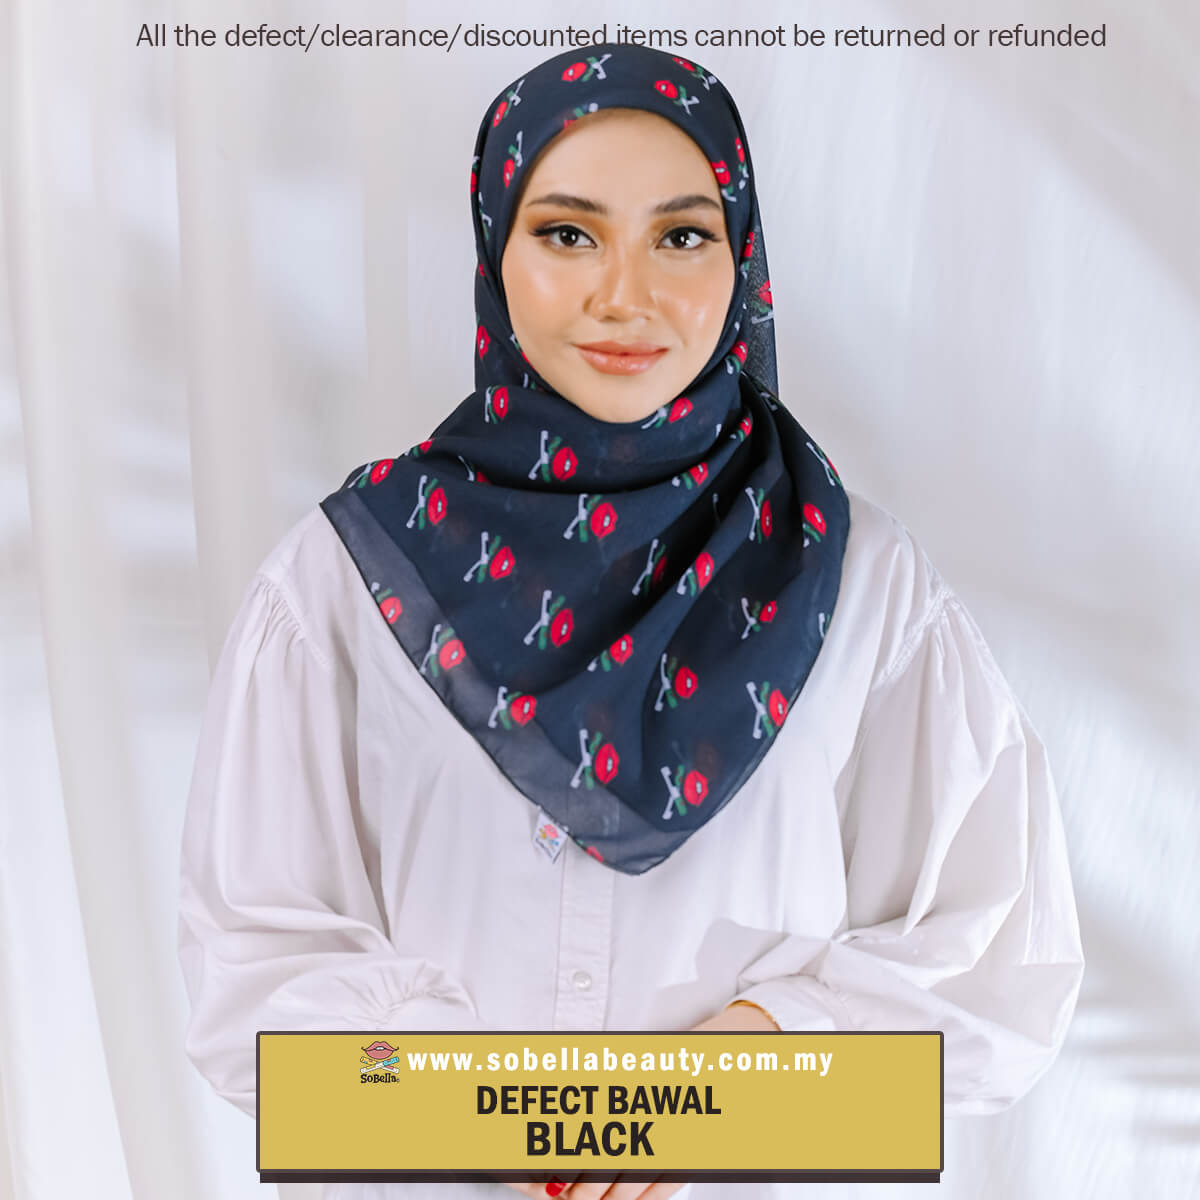 Defect Bawal Palestine (defect 30% below) - Sobella Beauty